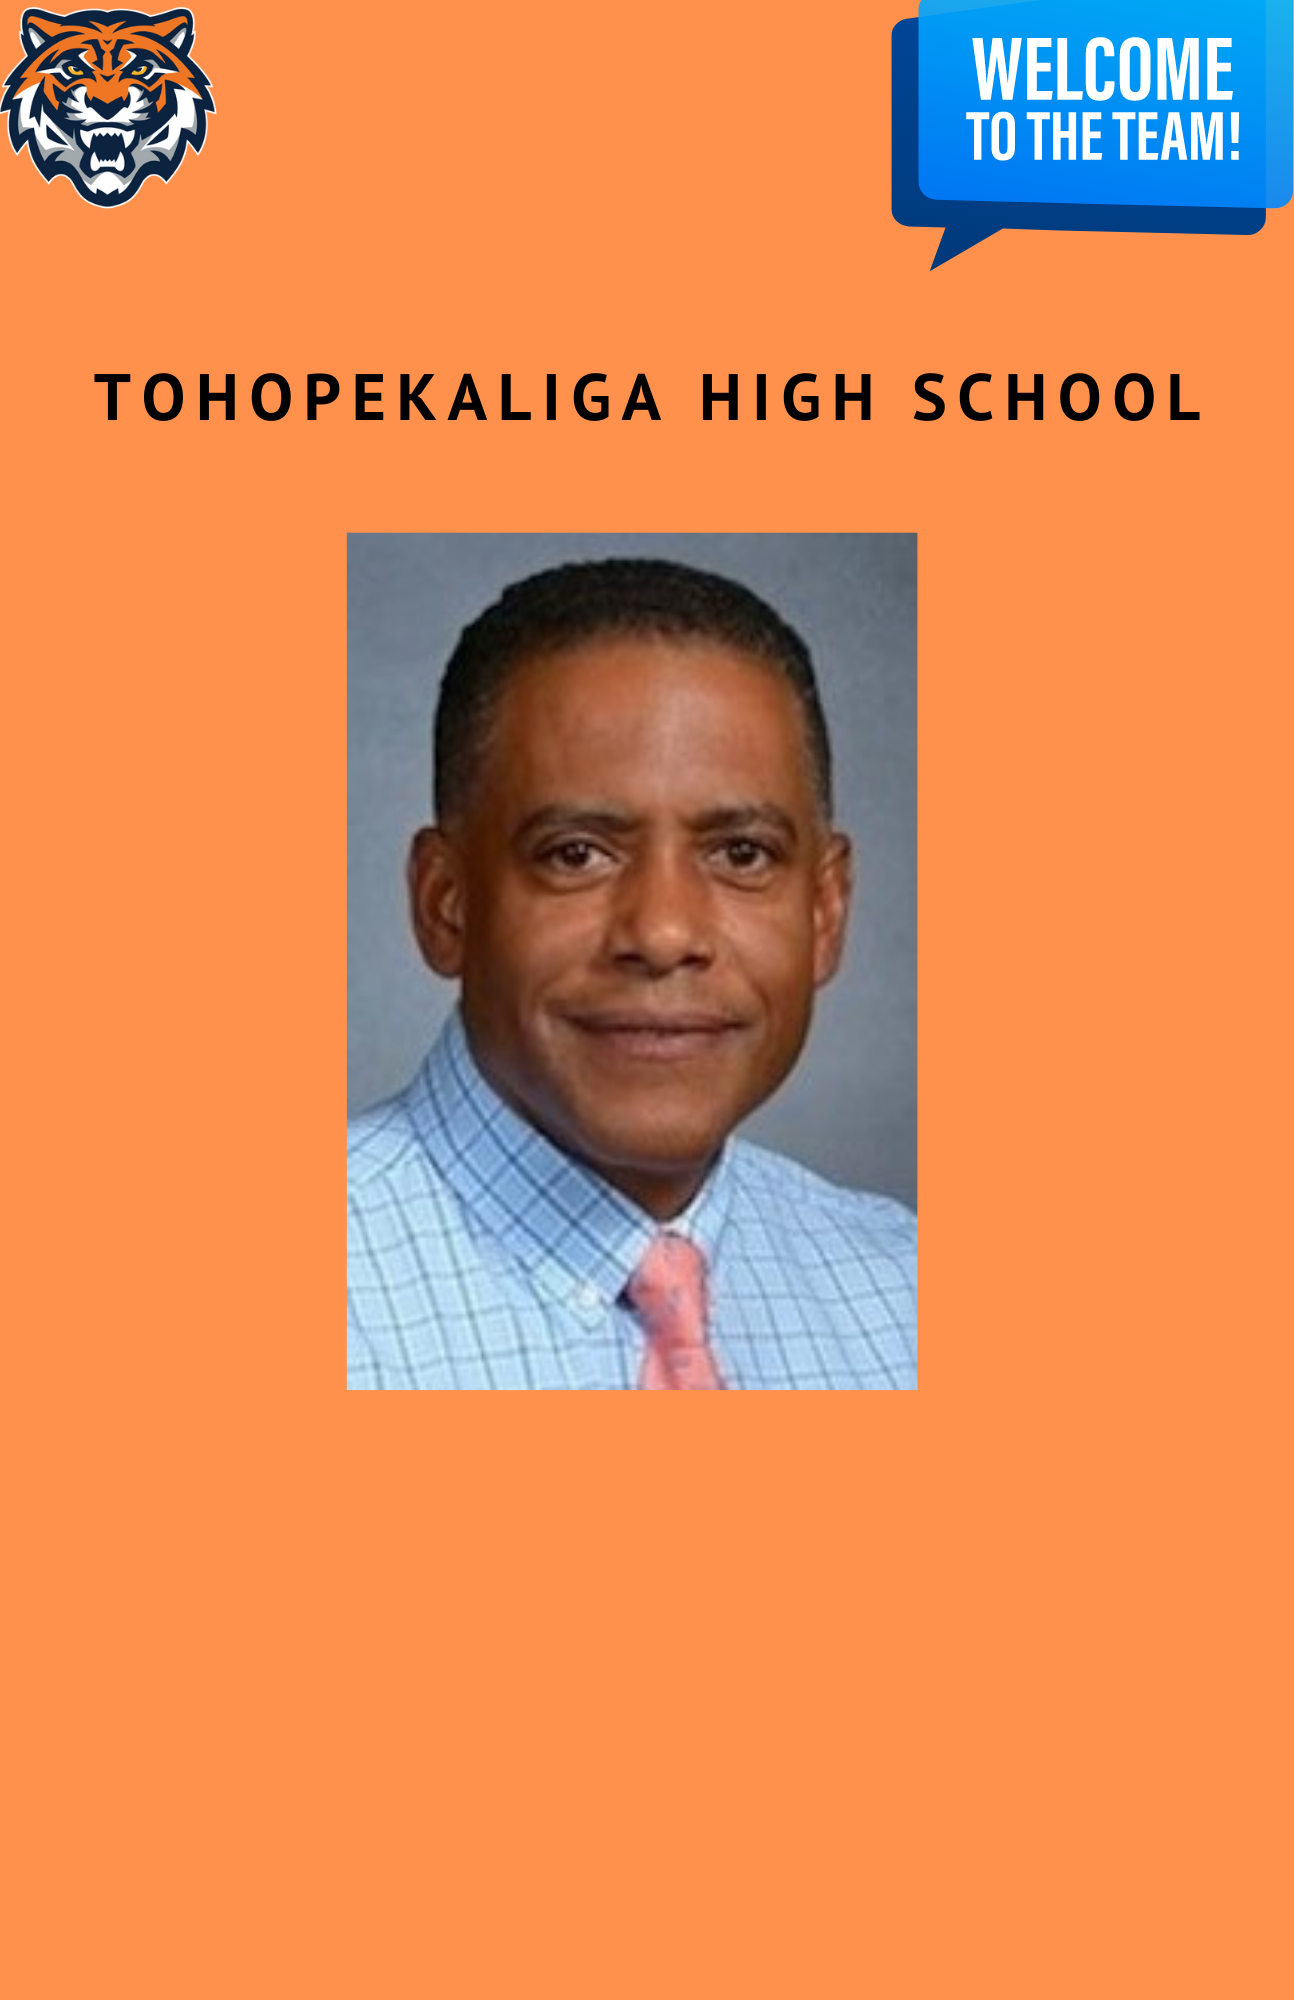  Please help us welcome Dr. Casado to Tohopekaliga High School